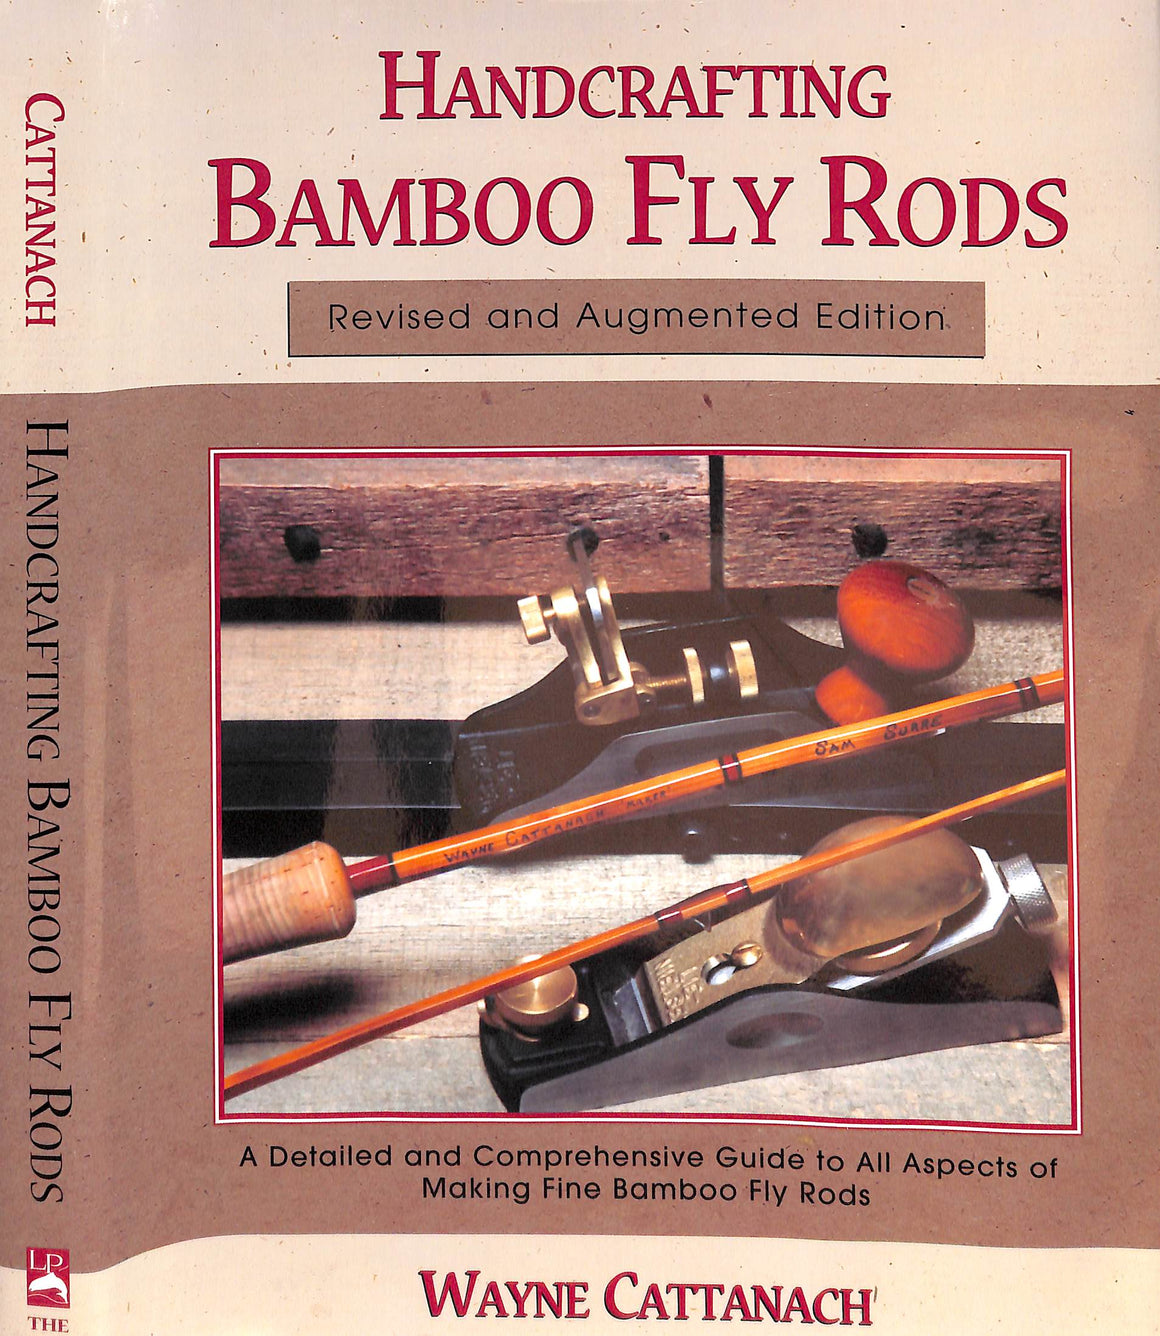 "Handcrafting Bamboo Fly Rods" 2000 CATTANACH, Wayne